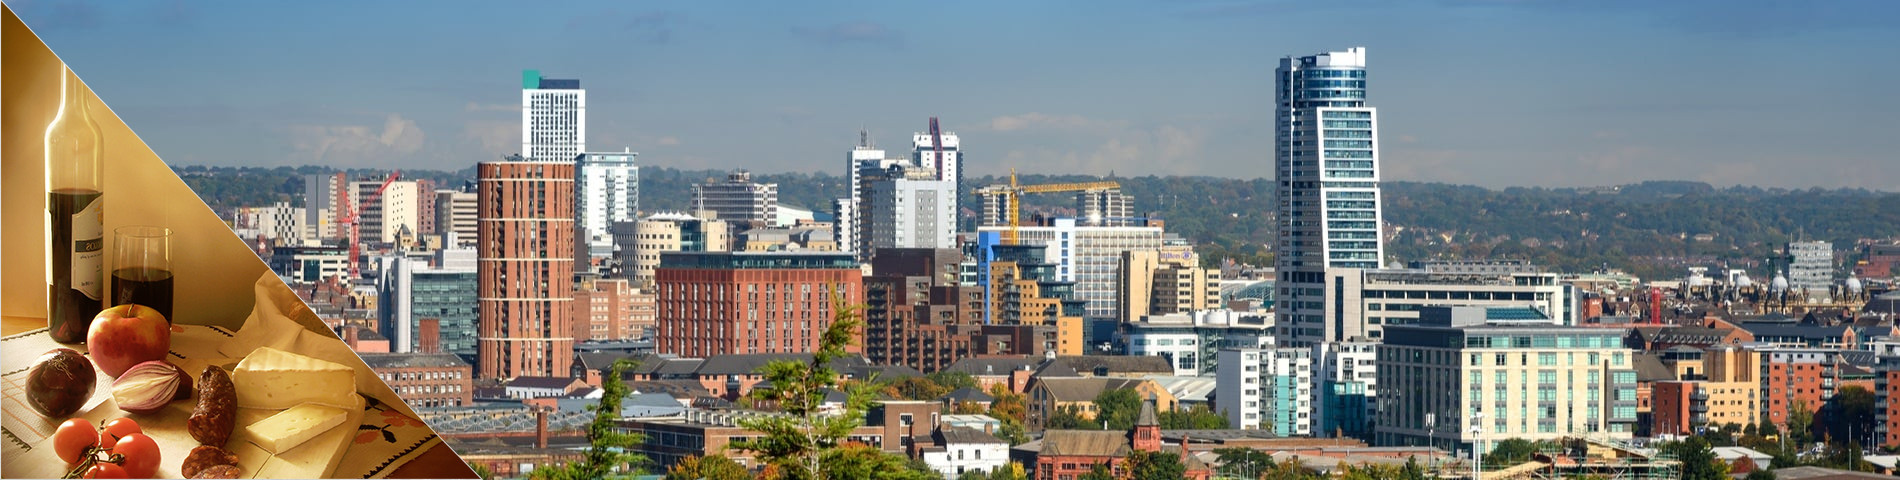 Leeds - Inglese & Cultura